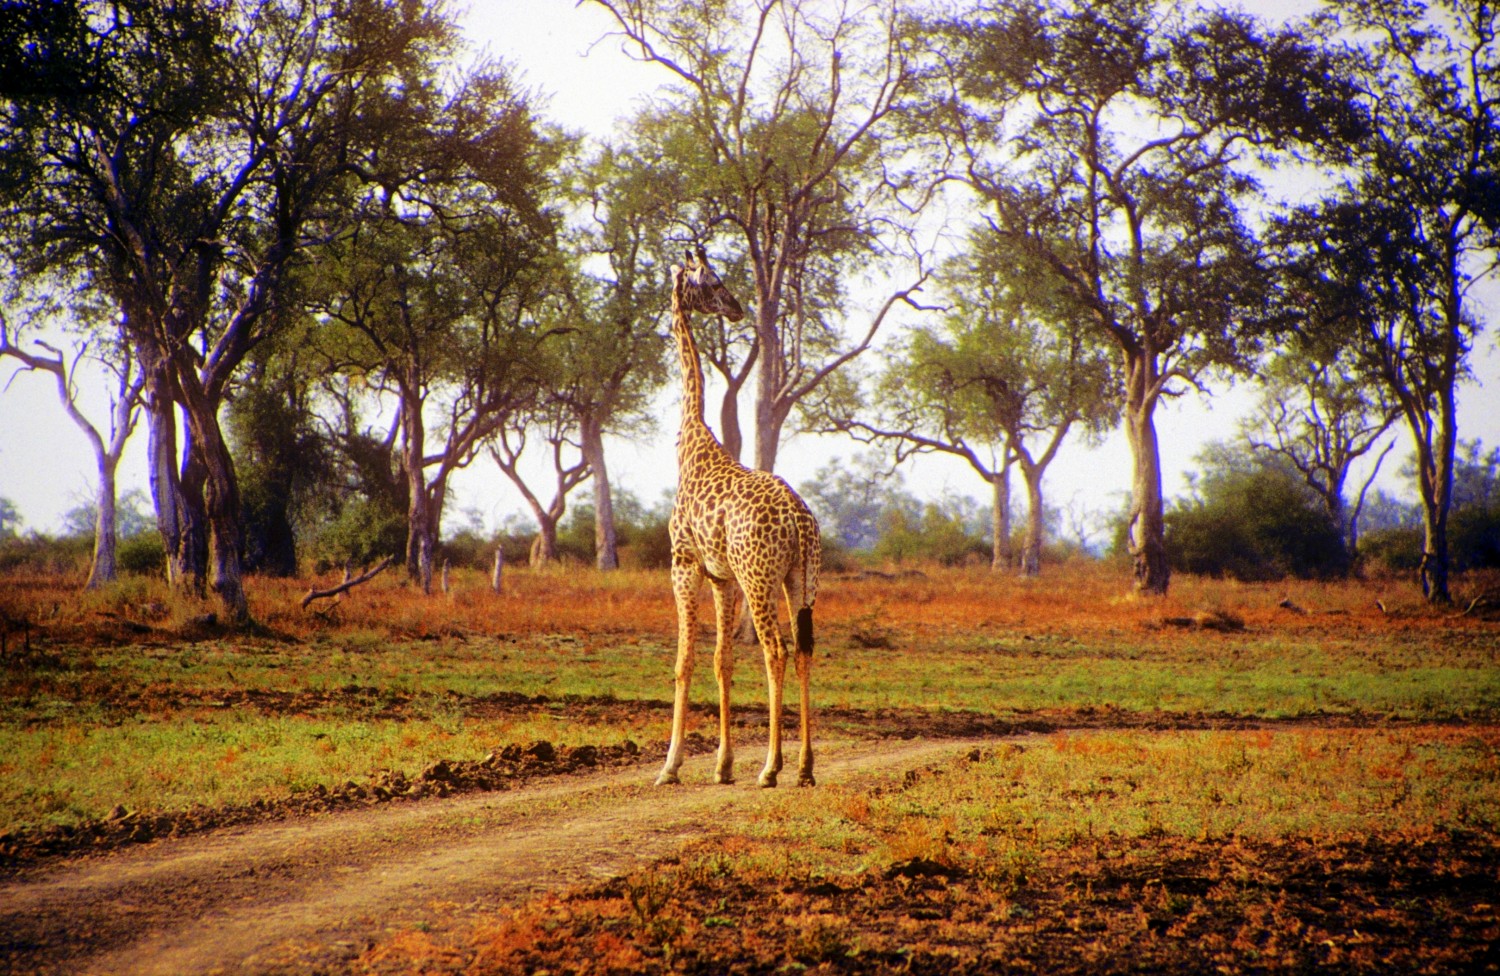 Part 2 - Beginning Our Walking Safari in Zambia